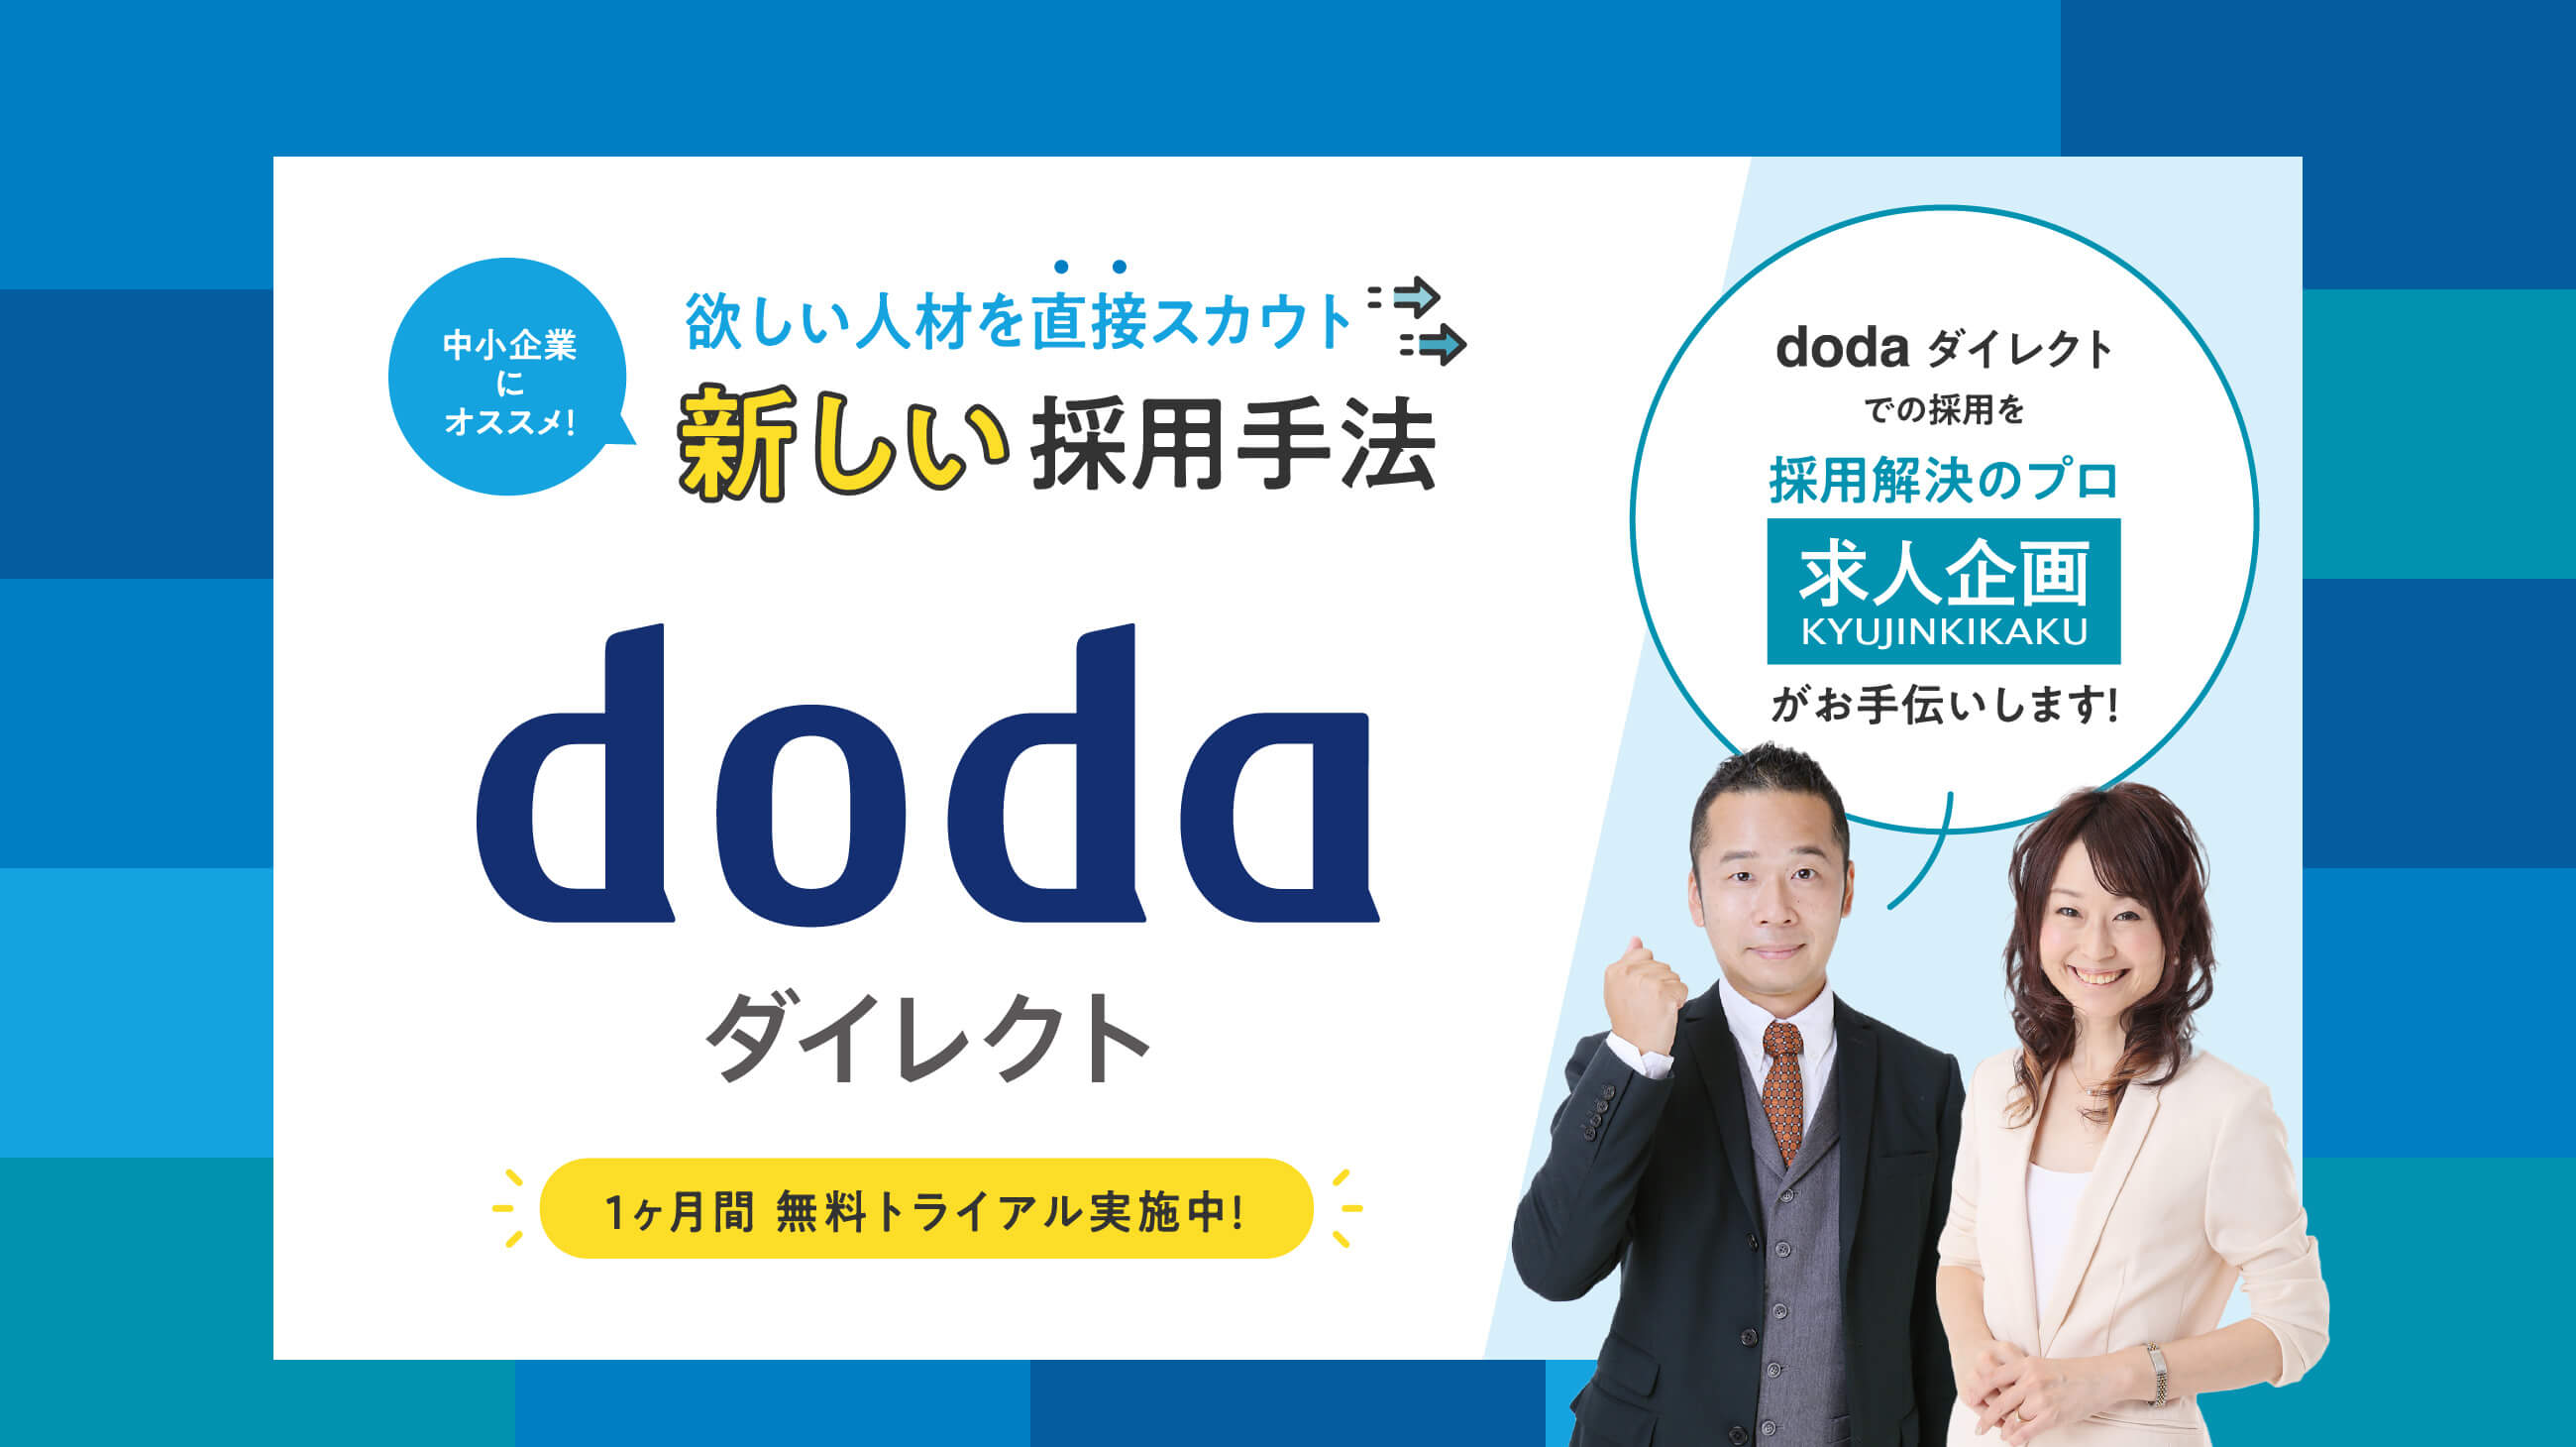 doda ダイレクト 欲しい人材を直接スカウト 新しい採用手法 中小企業におすすめ！